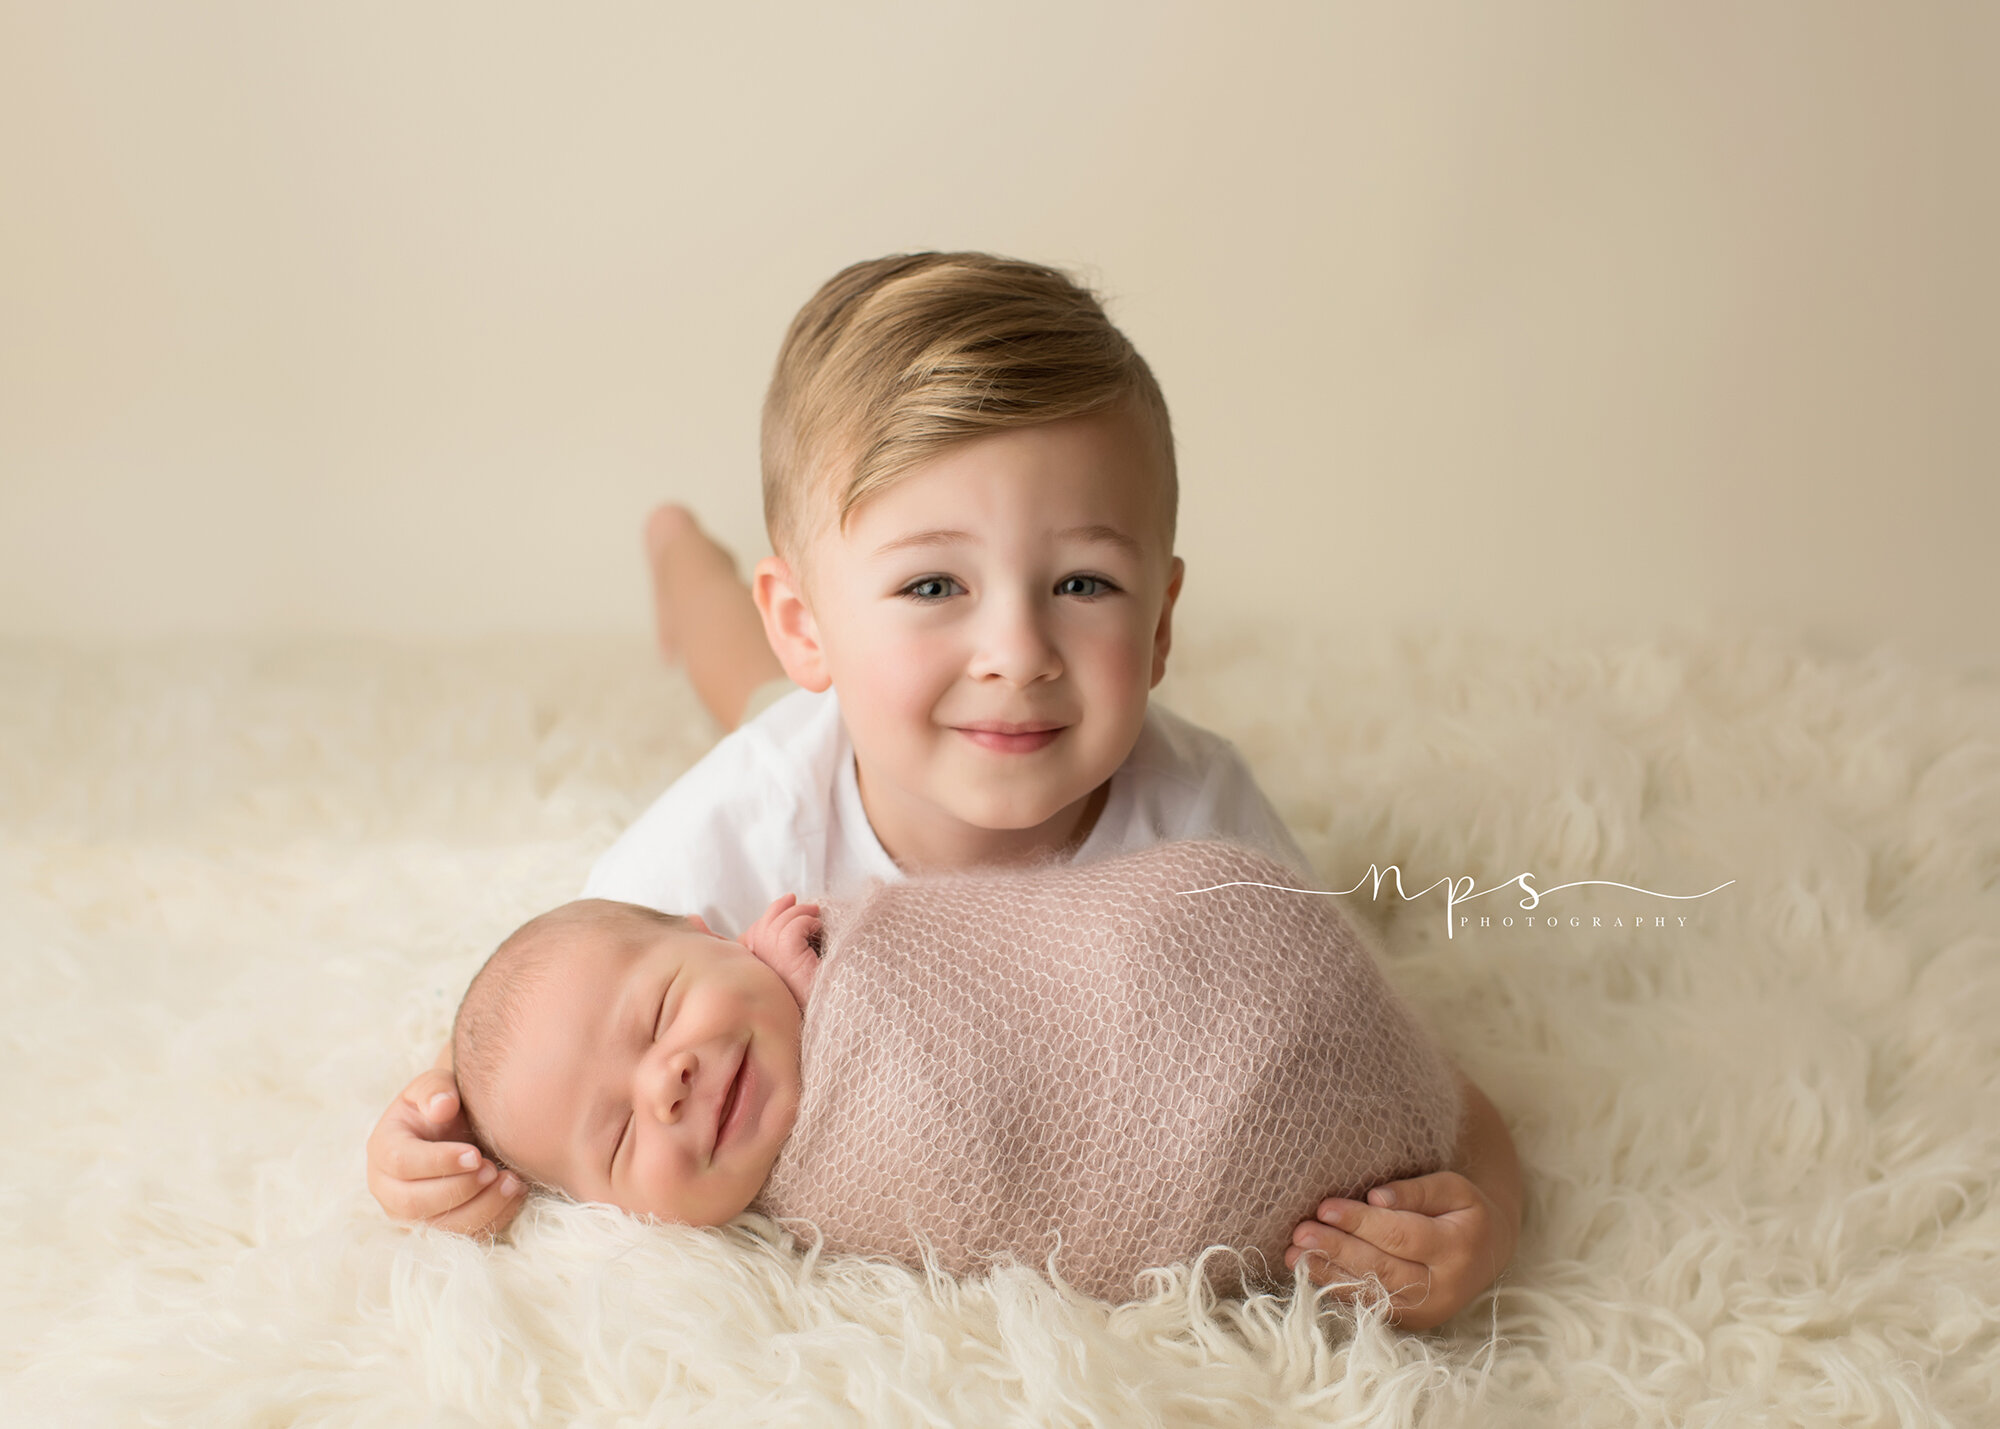 NPS-Photography-Pinehurst-Newborn-Photography-Baby-L-002